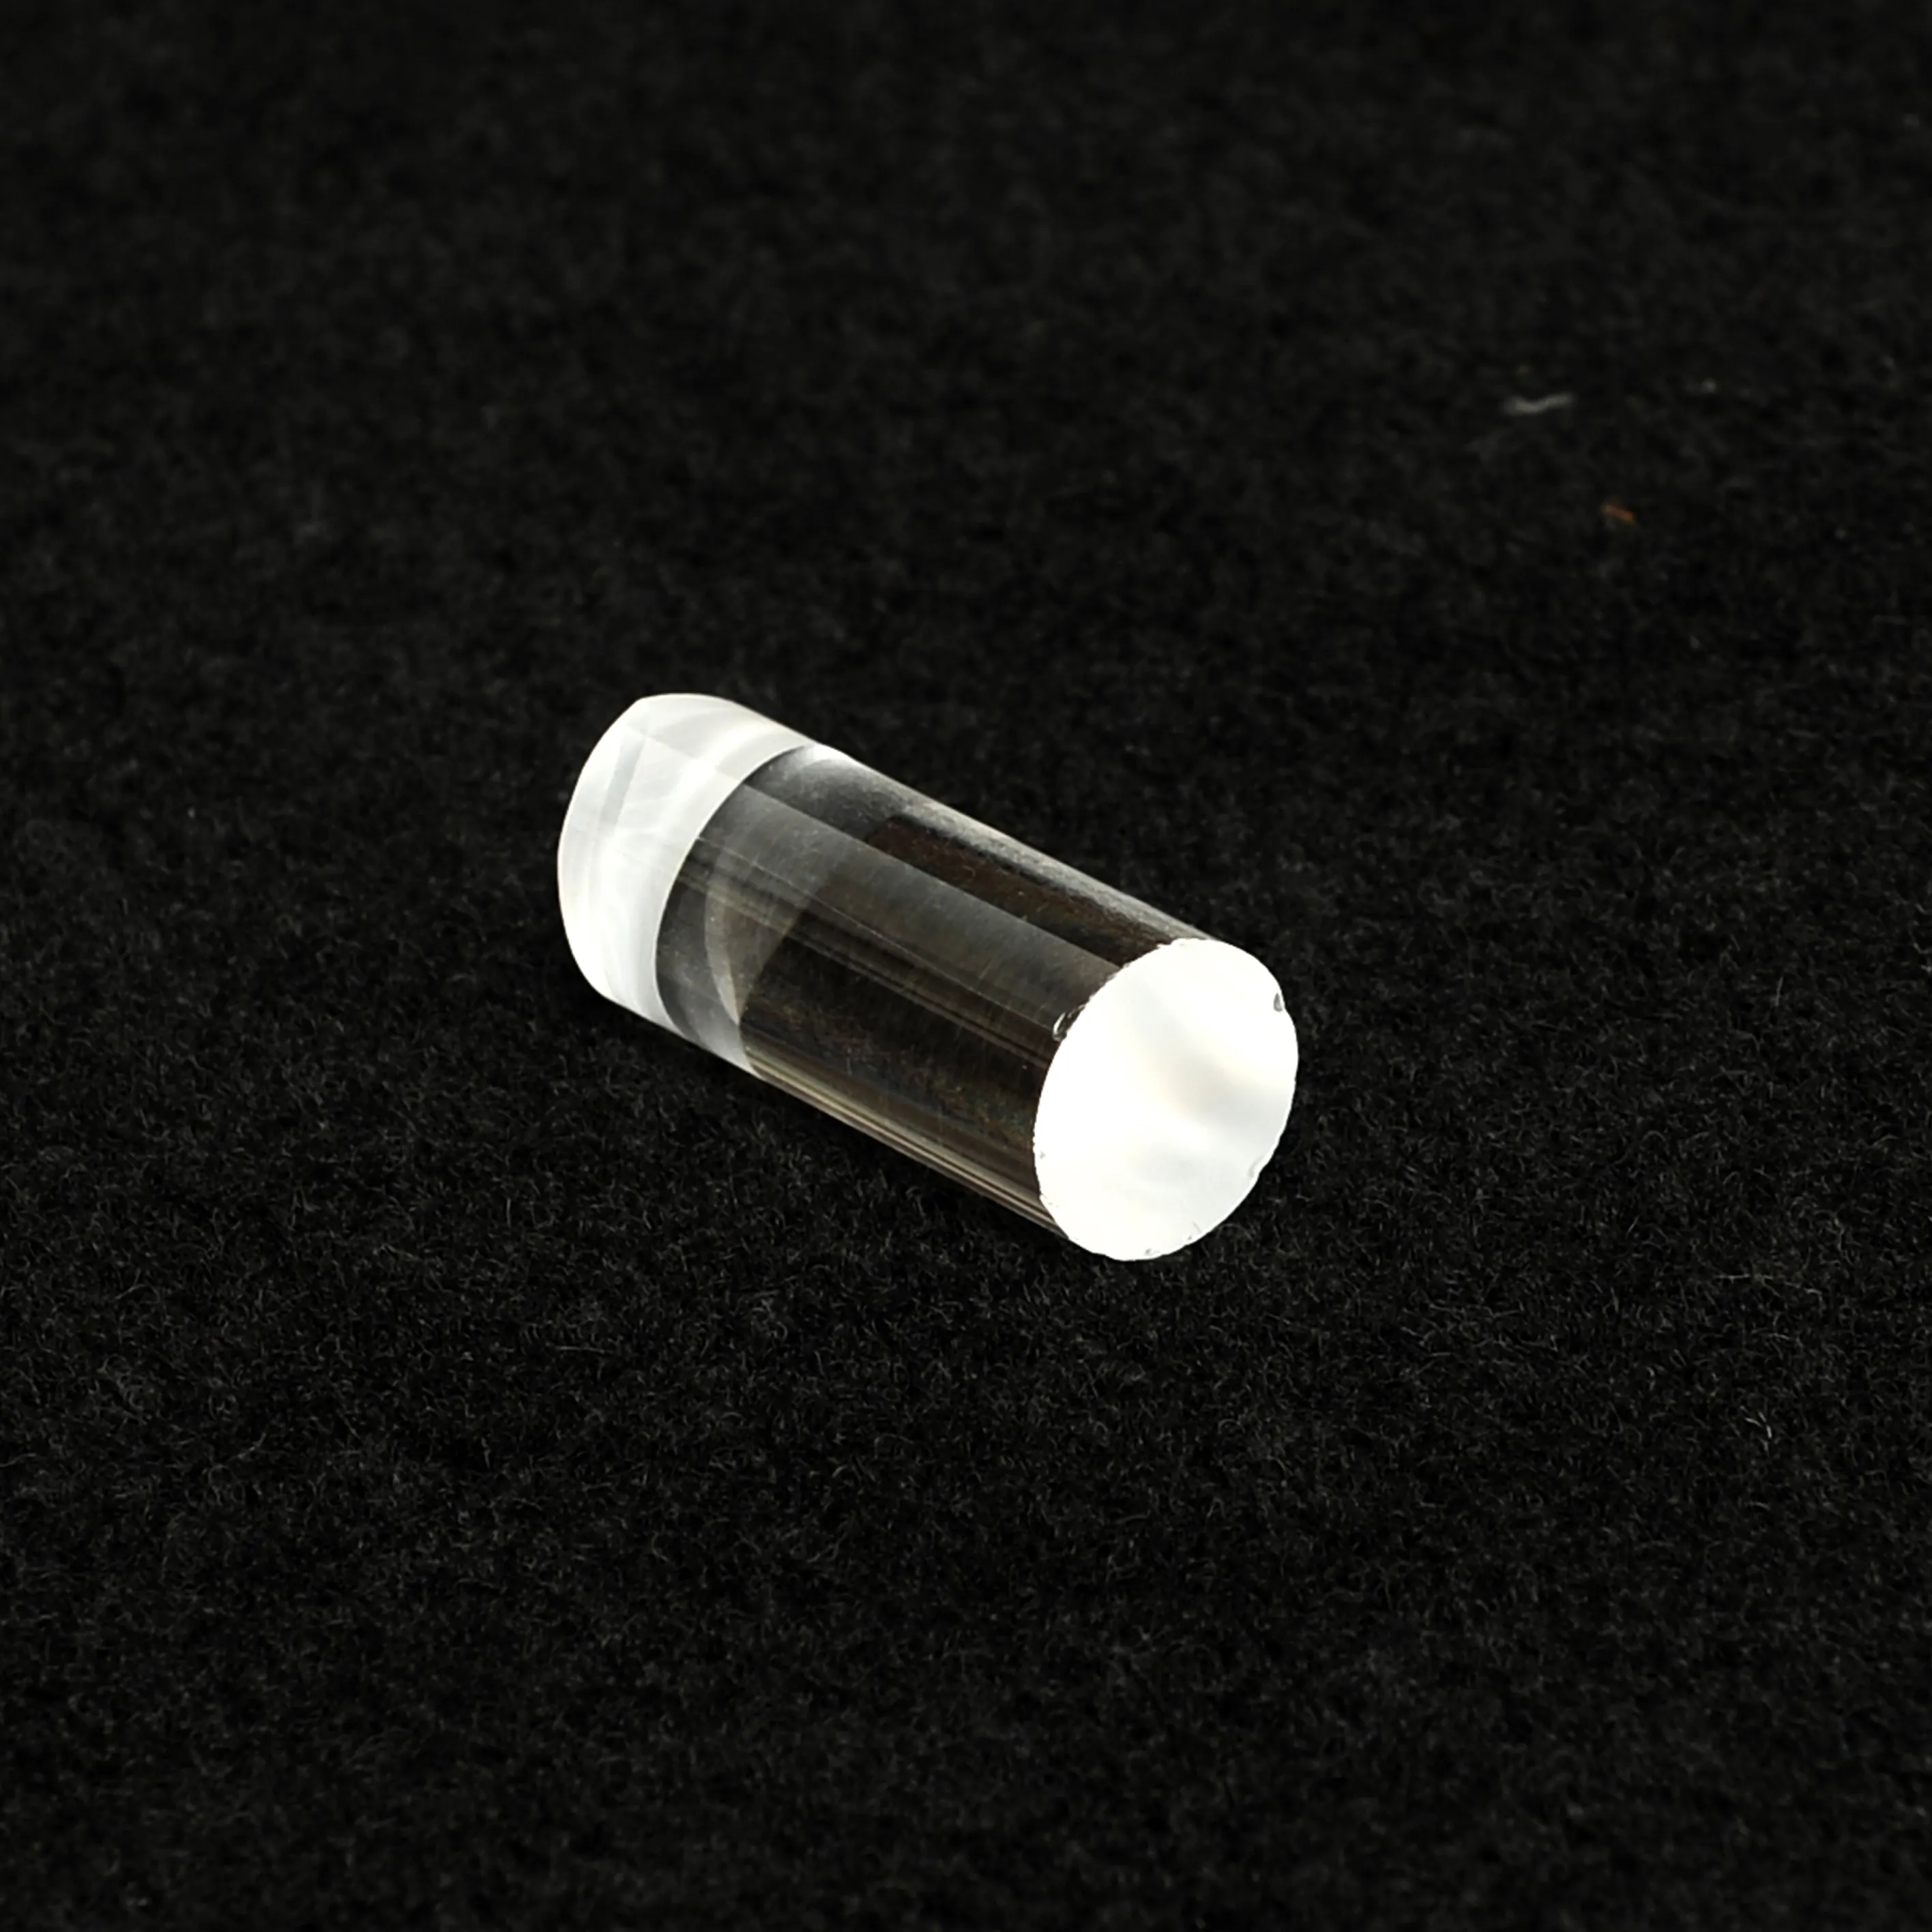 50mm diameter quartz glass rod